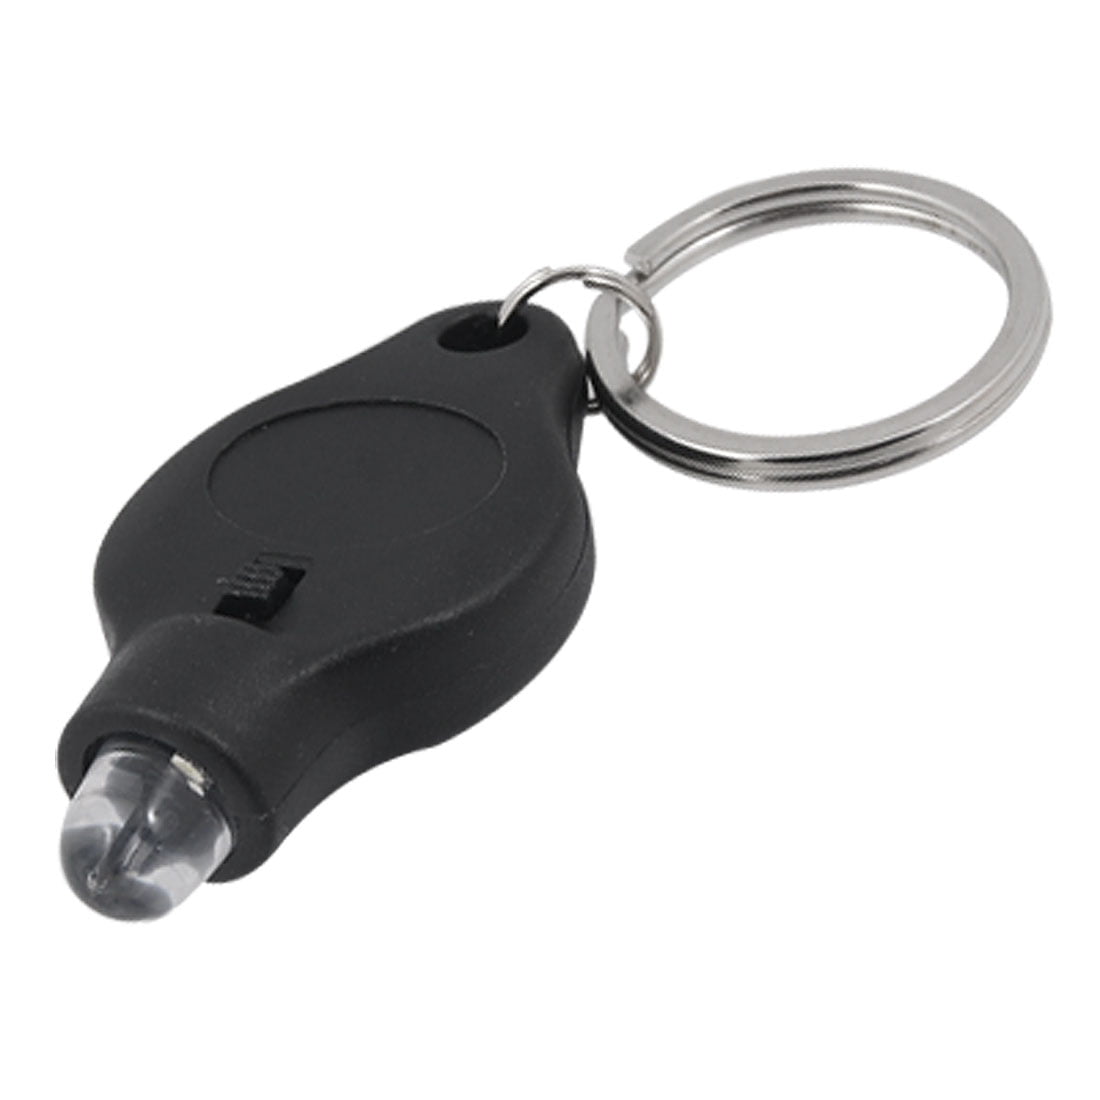 Uniclife 10 Pack Uv Light Mini Led Keychain Flashlight Torch Lamp Key Ring Light 